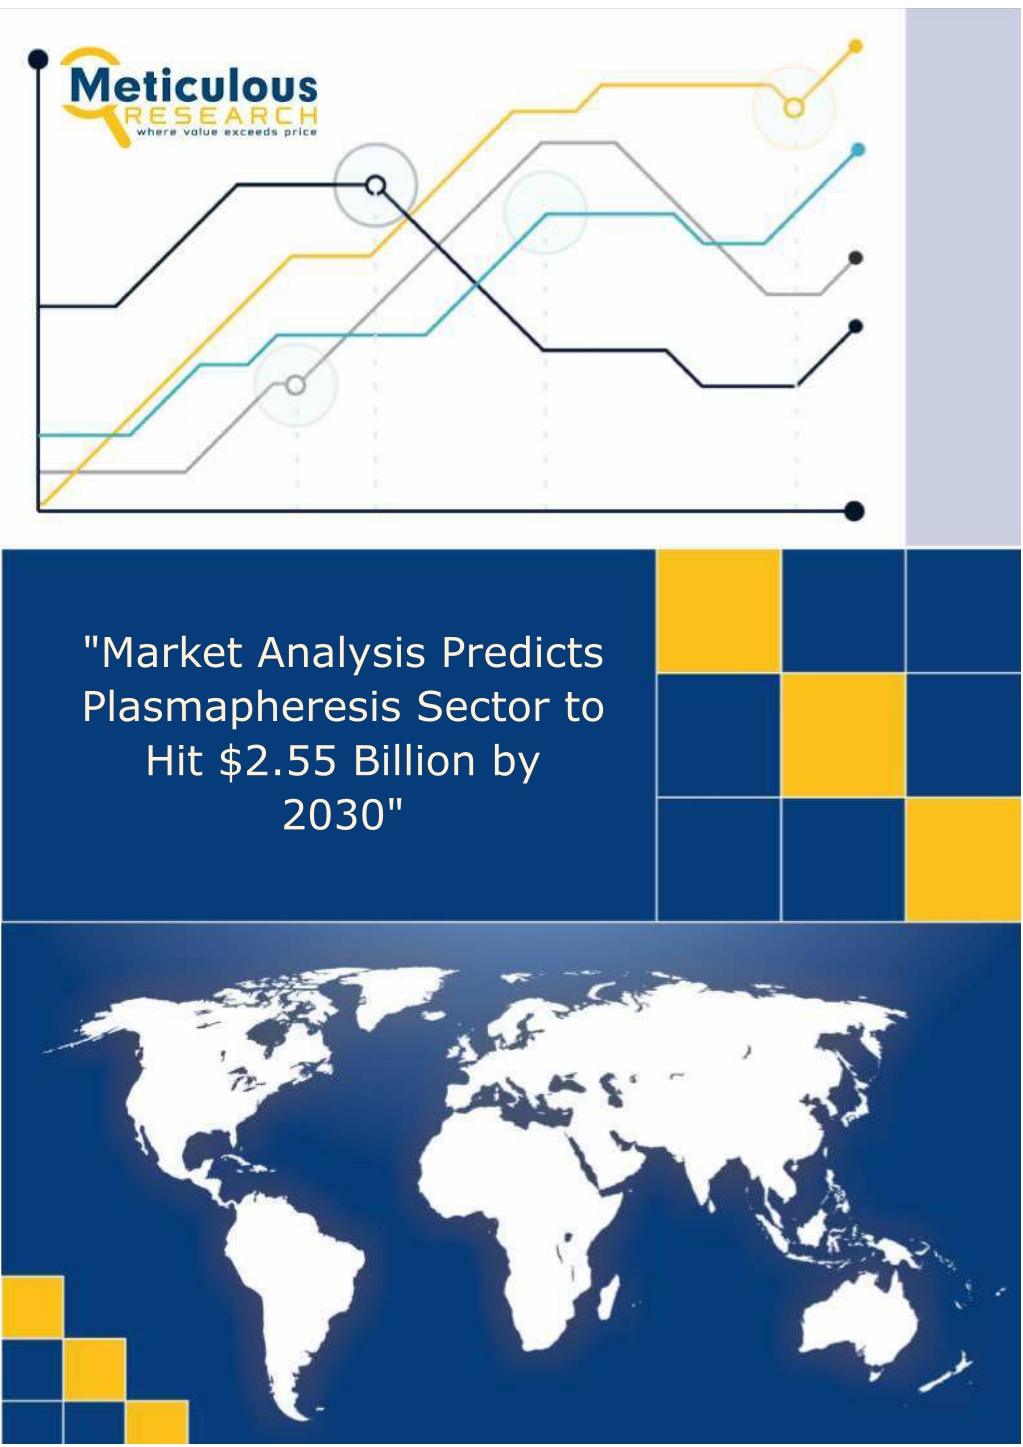 market analysis predicts plasmapheresis sector l.w